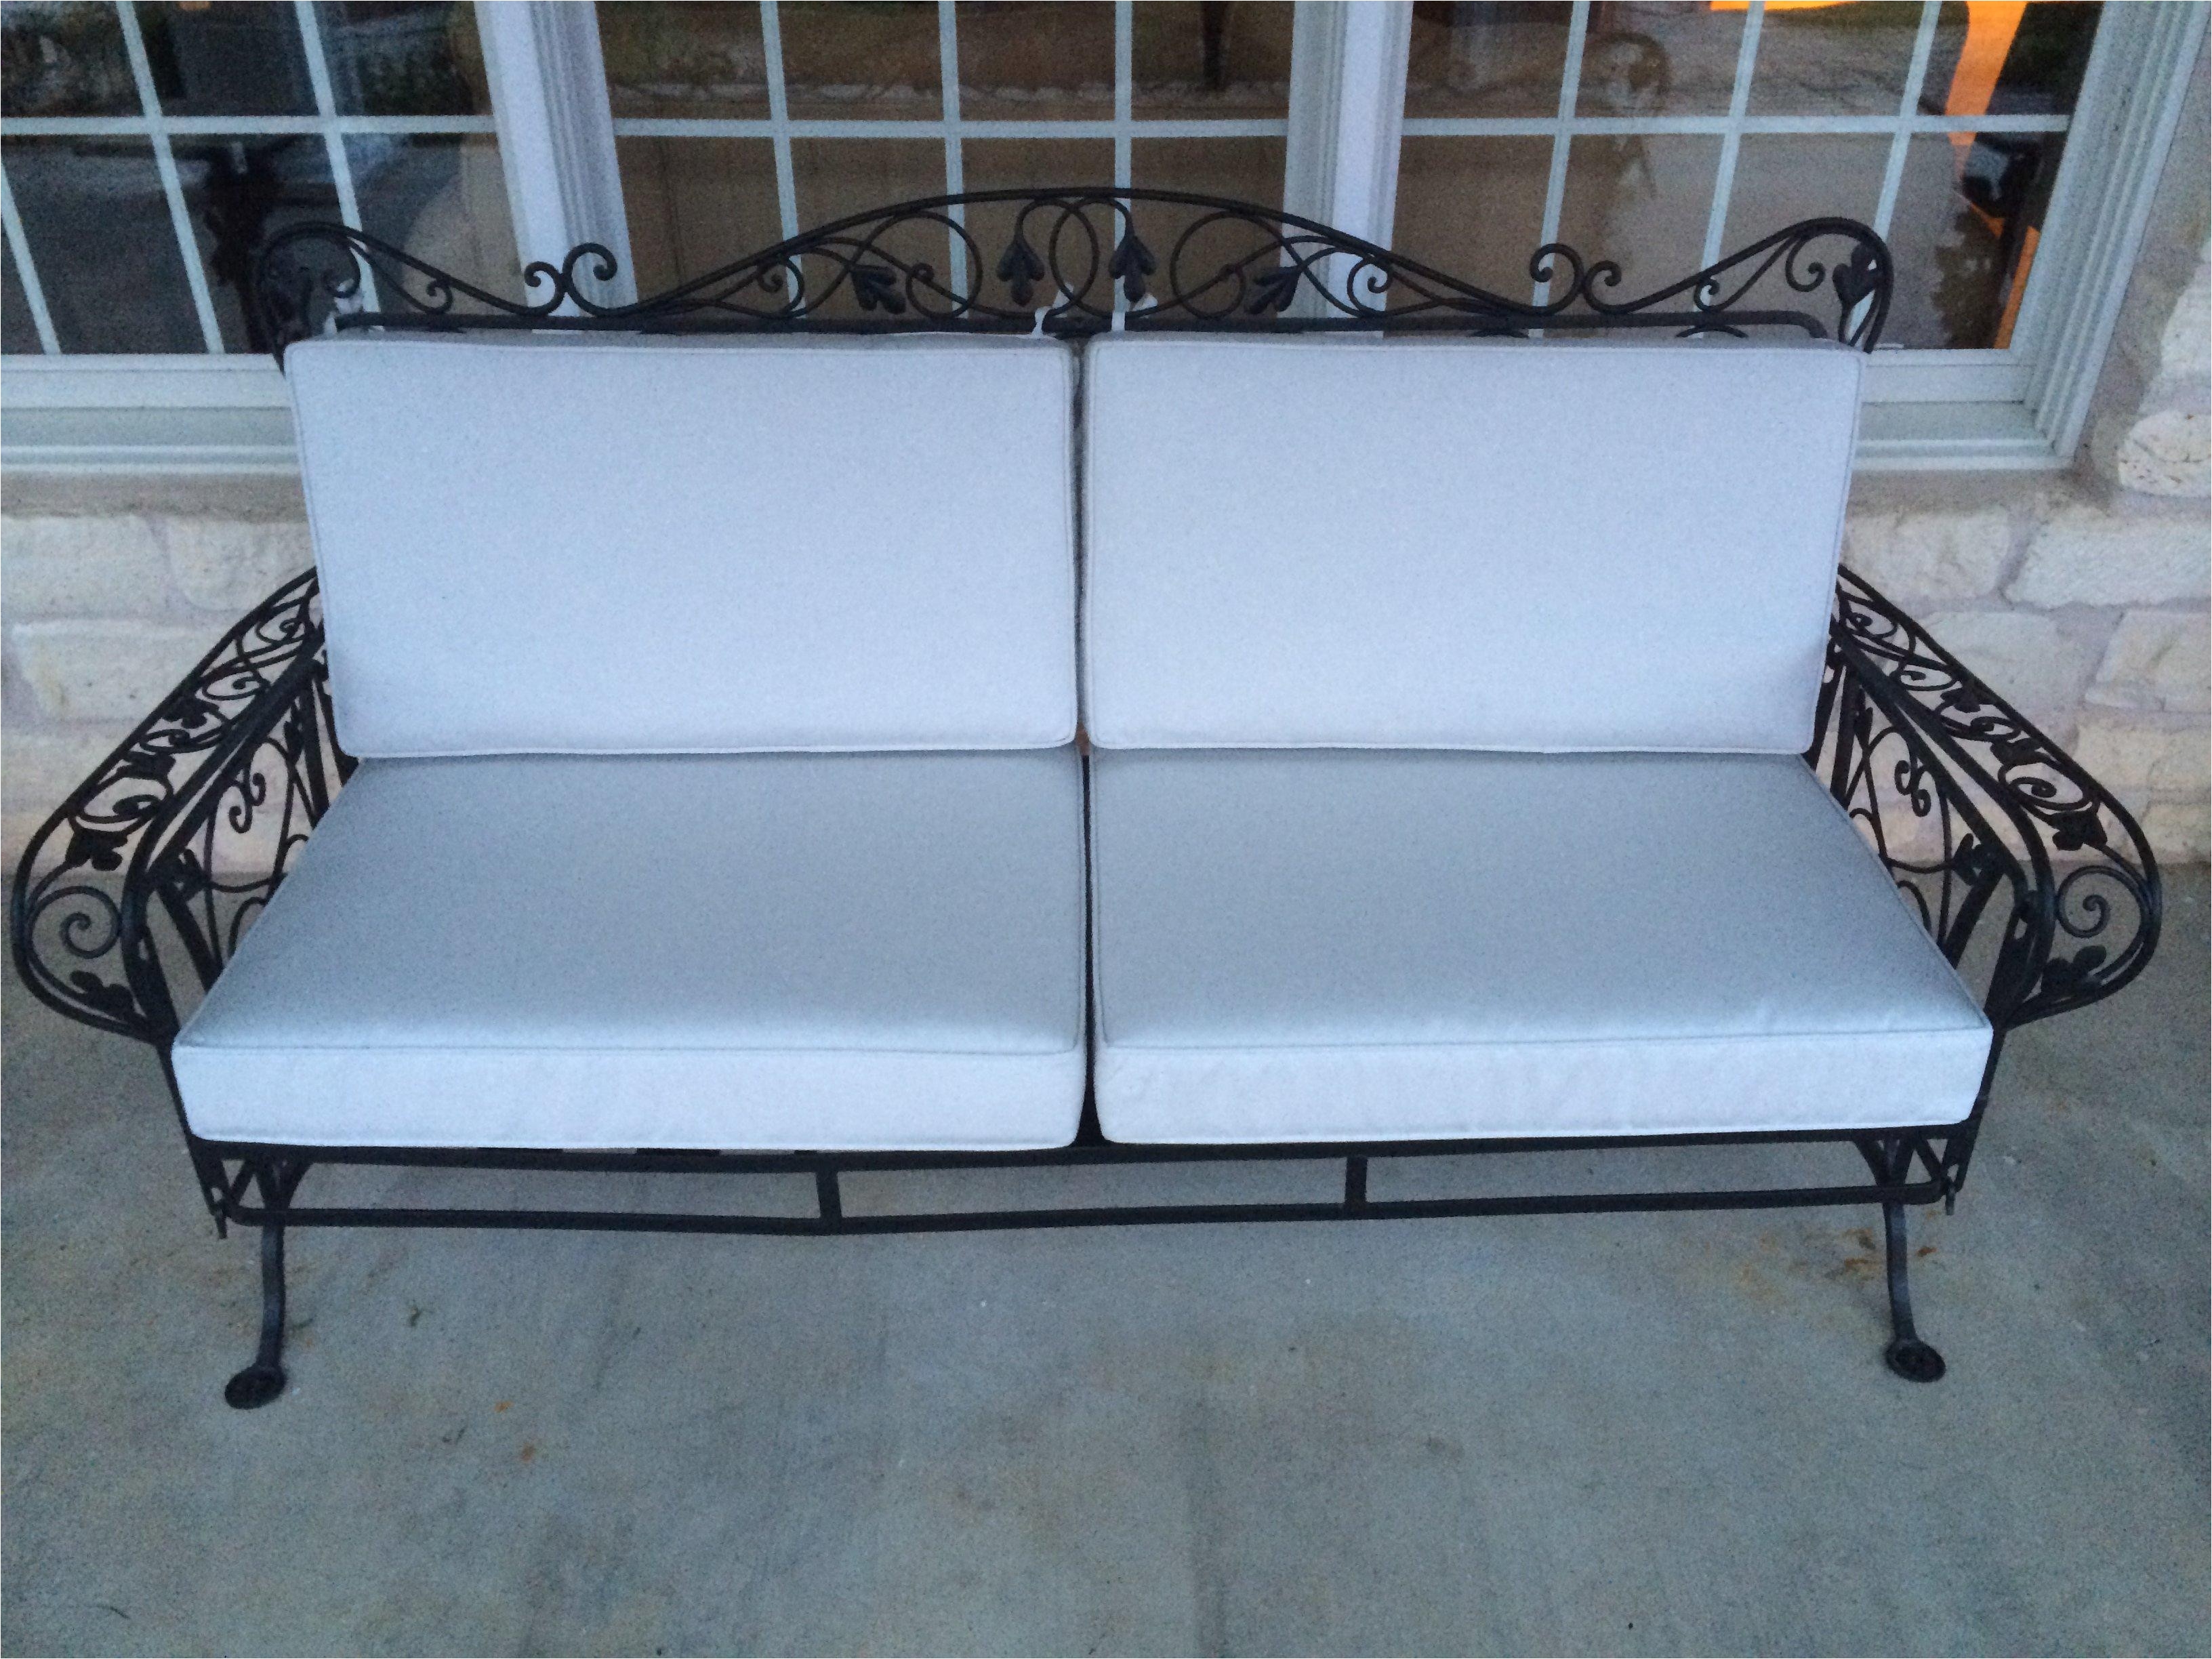 san diego patio furniture luxury furniture outdoor loveseat elegant wicker outdoor sofa 0d patio